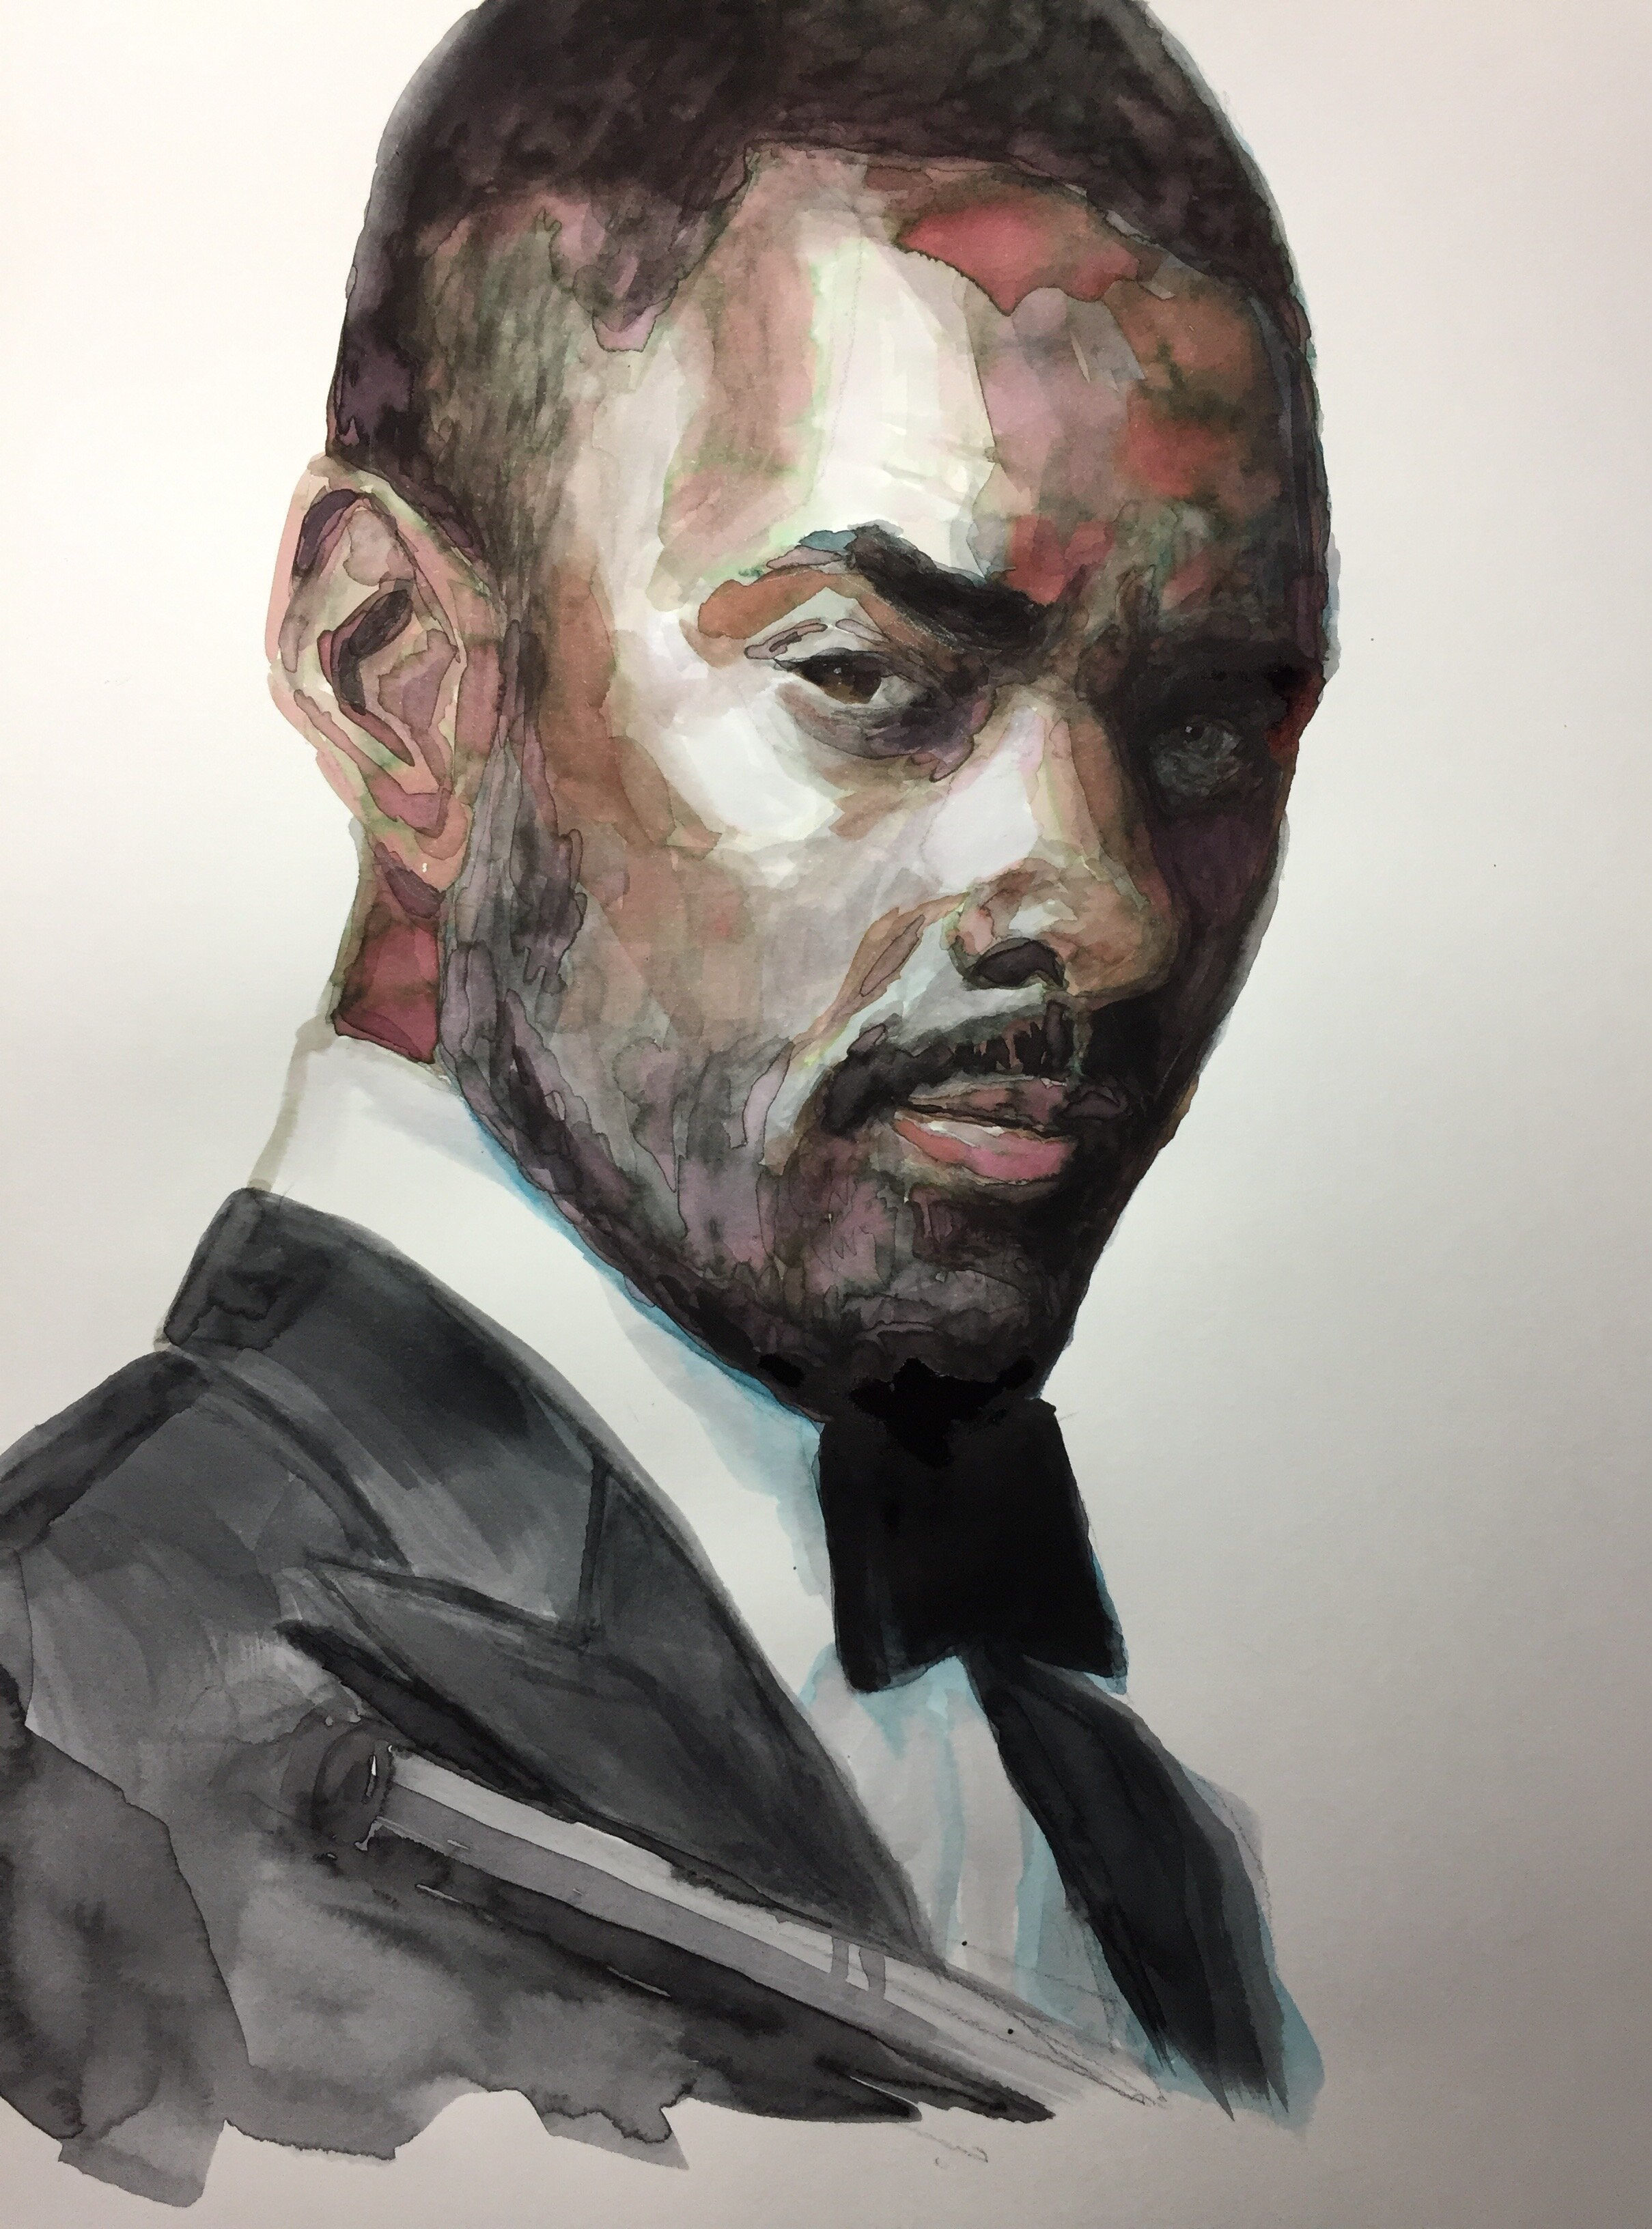 Idris Elba as Bond